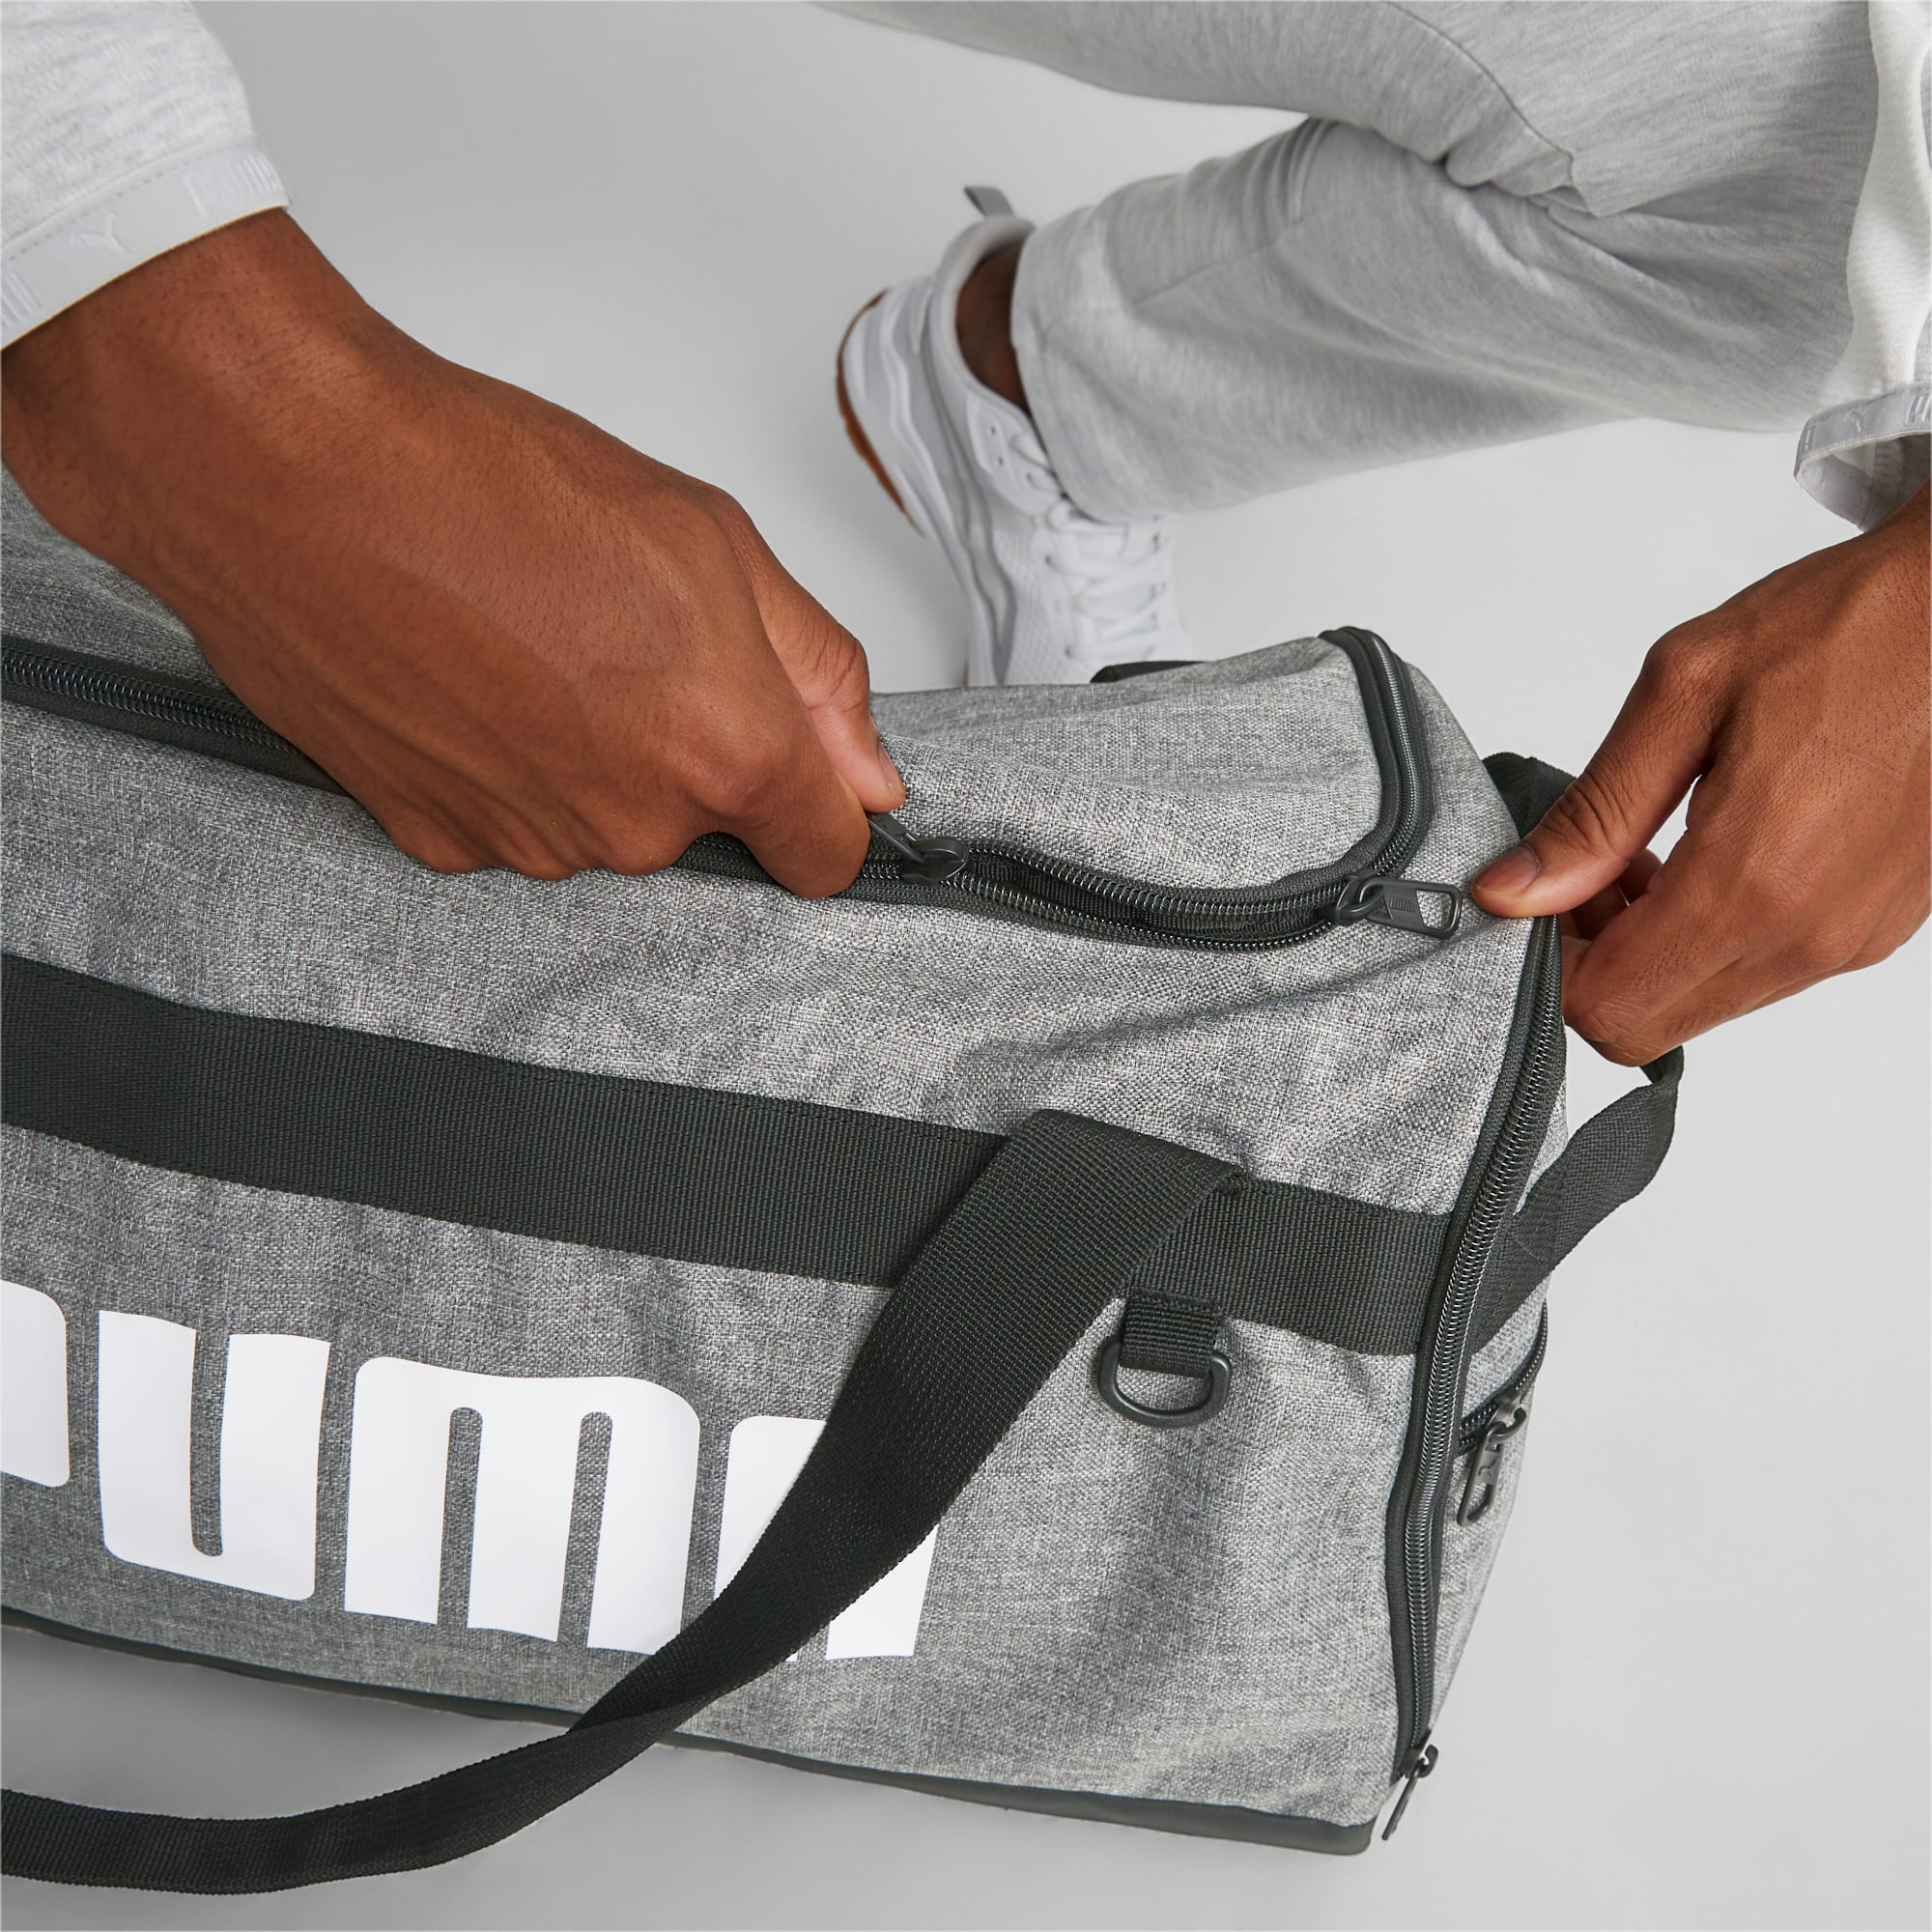 Women's PUMA Challenger S Duffle Bag, Medium Grey Heather, Accessories